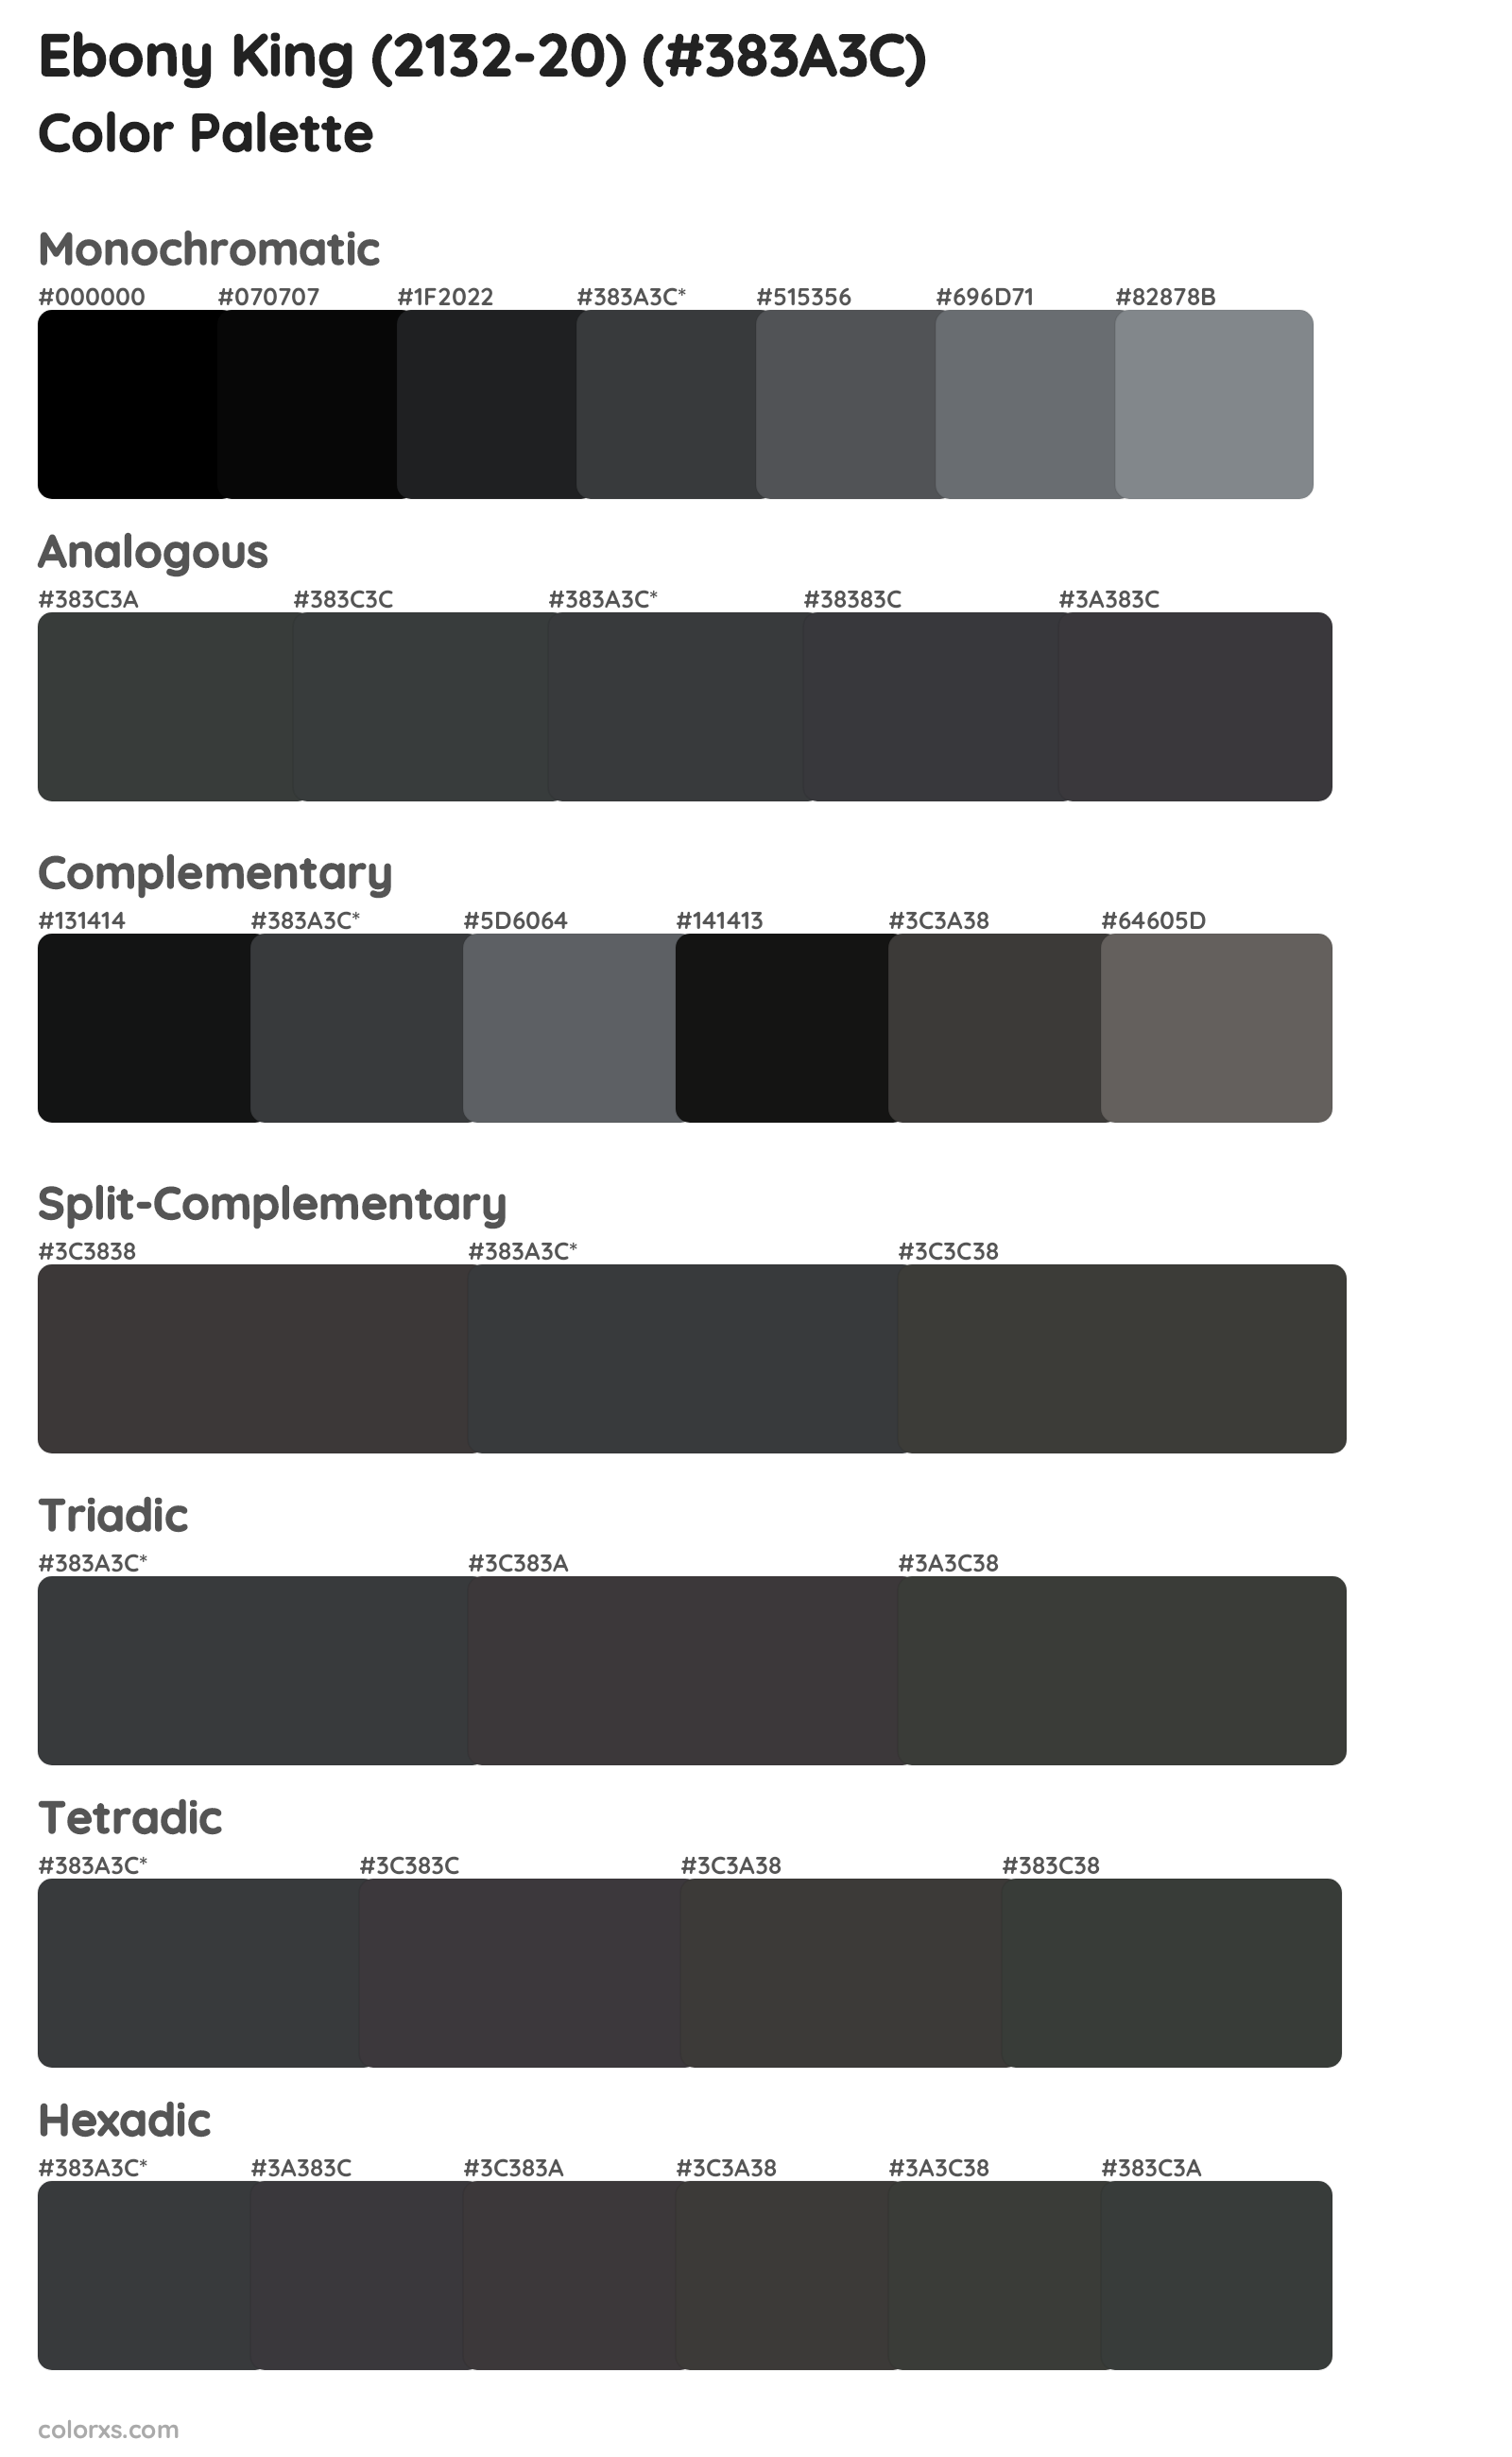 Ebony King (2132-20) Color Scheme Palettes